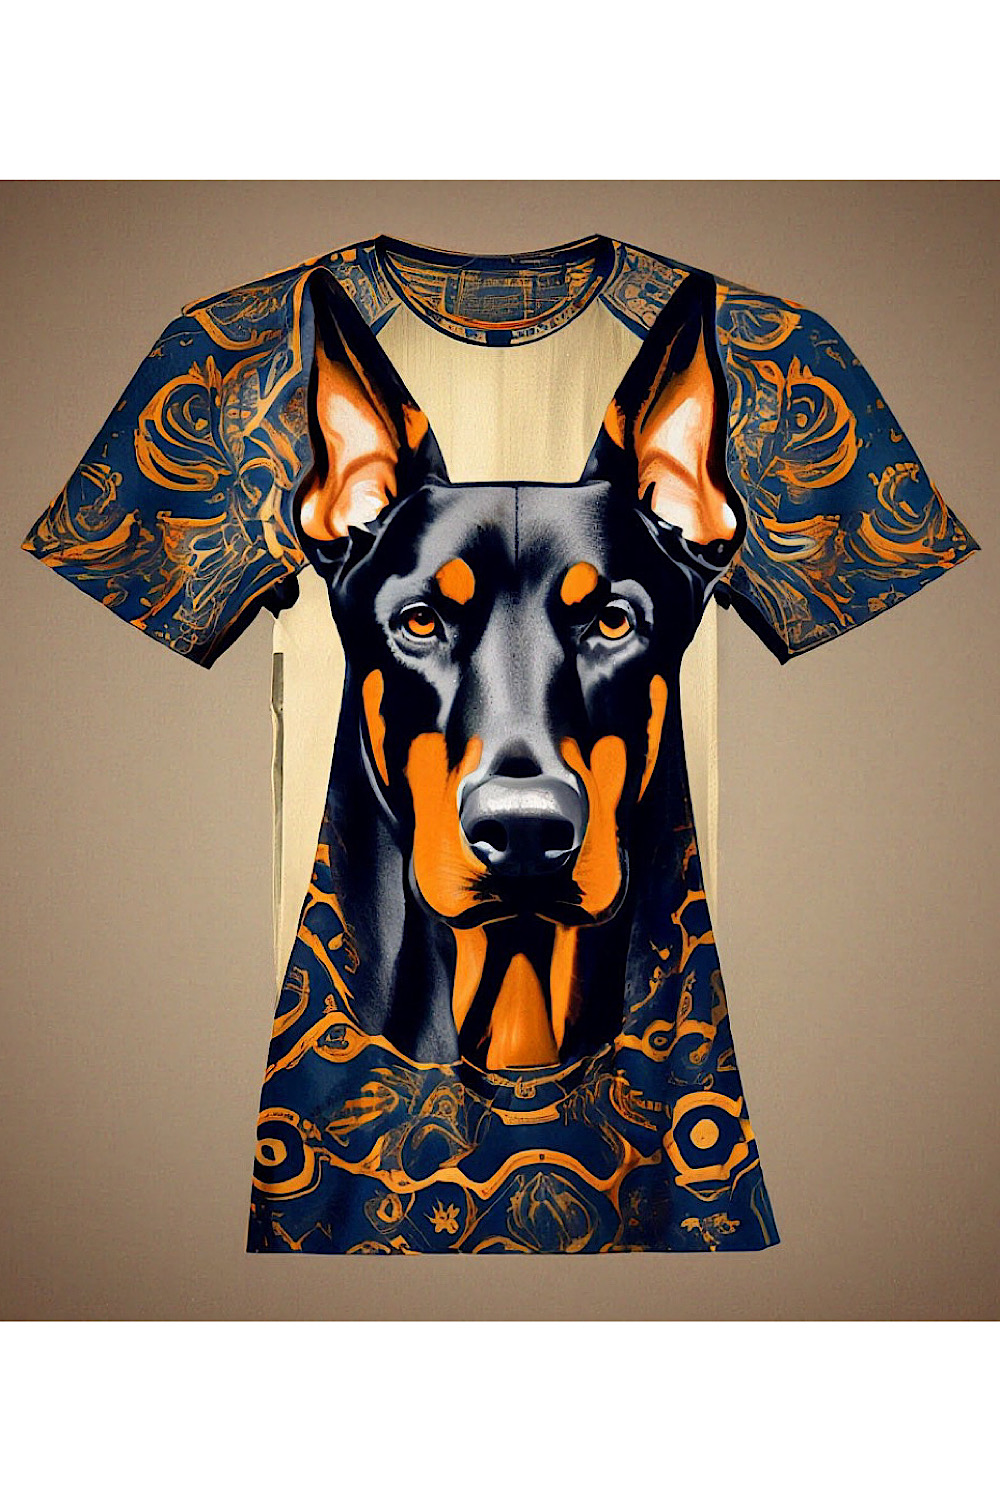 Men's Unisex T-shirt, abstract pattern, Black and orange design, Doberman pattern pinterest preview image.